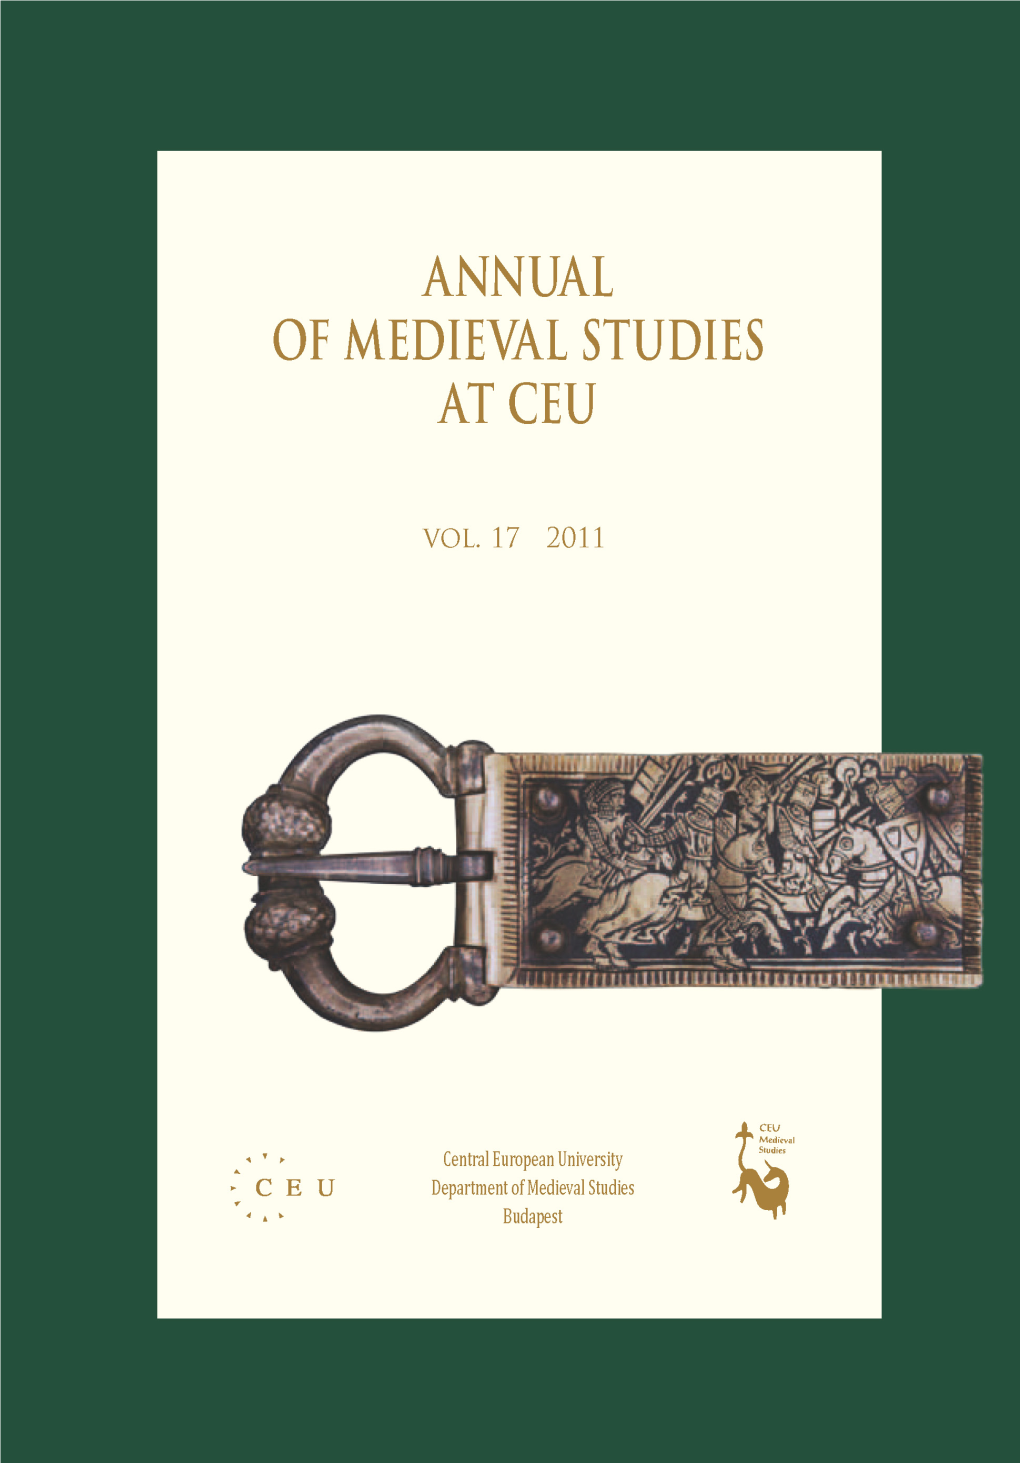 CEU Department of Medieval Studies